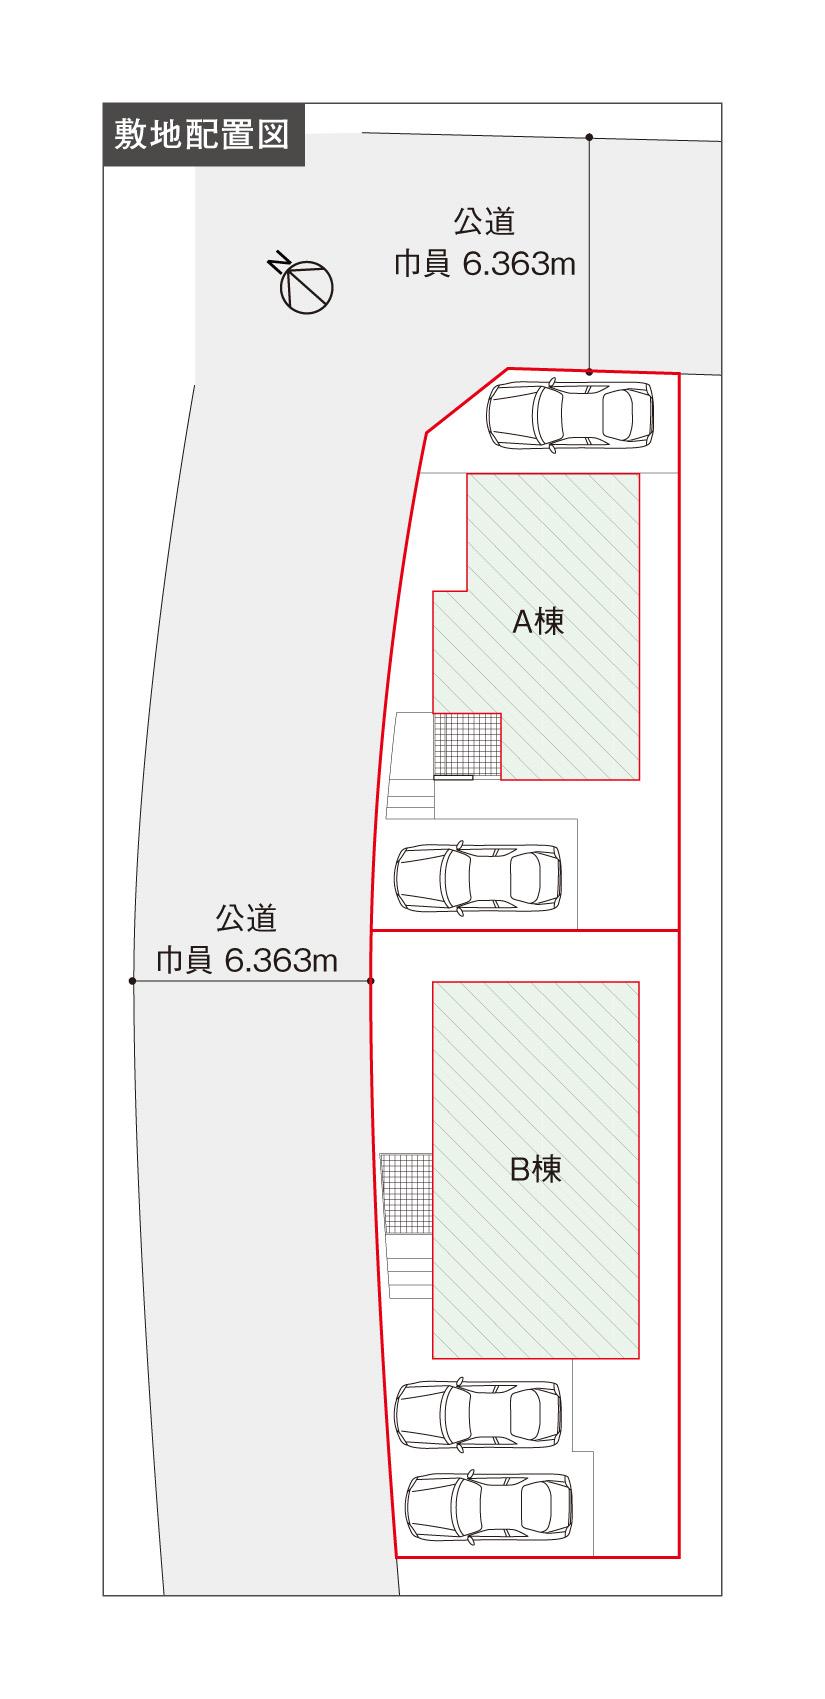 The entire compartment Figure. Site compartment split view